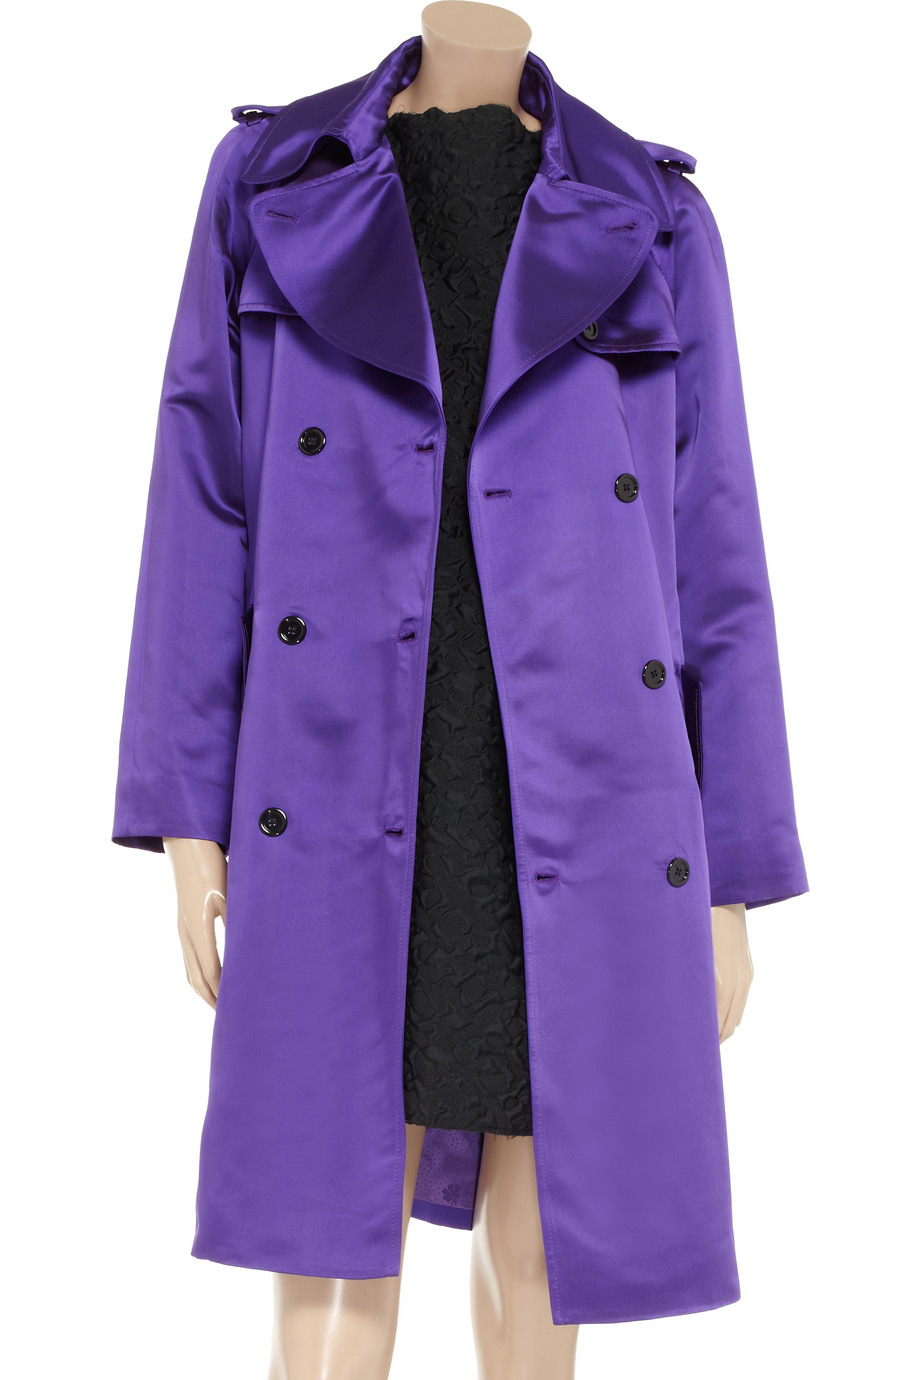 Dolce & Gabbana Satintwill Trench Coat in Violet (Purple) - Lyst